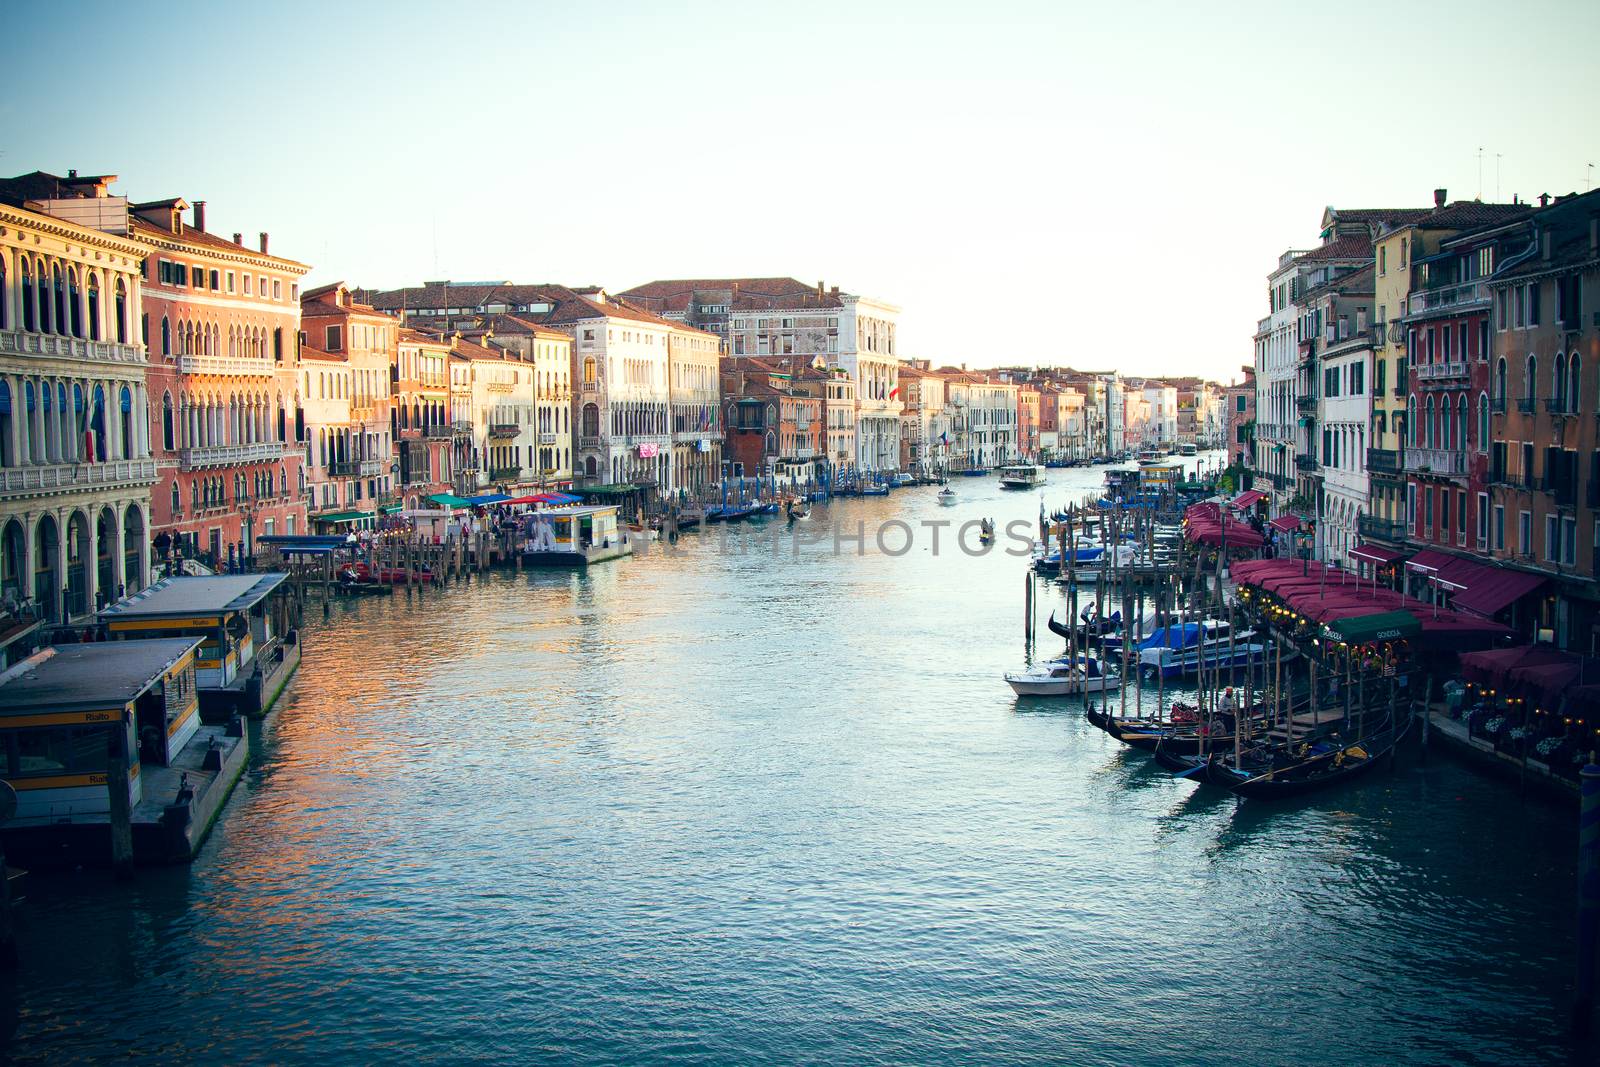 Venice Canal and gondola's